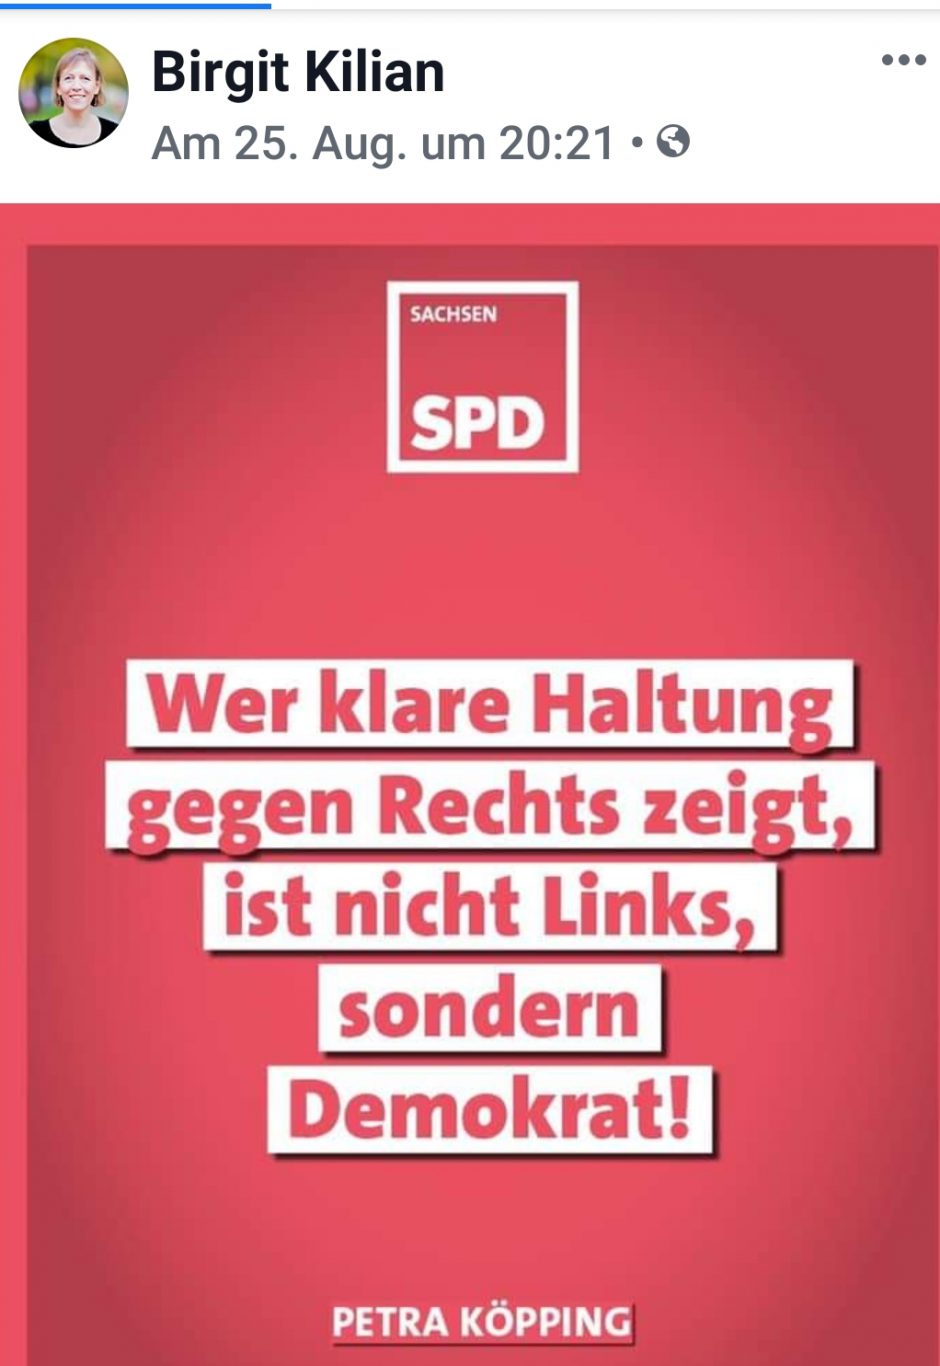 SPD-Werbung bei Facebook